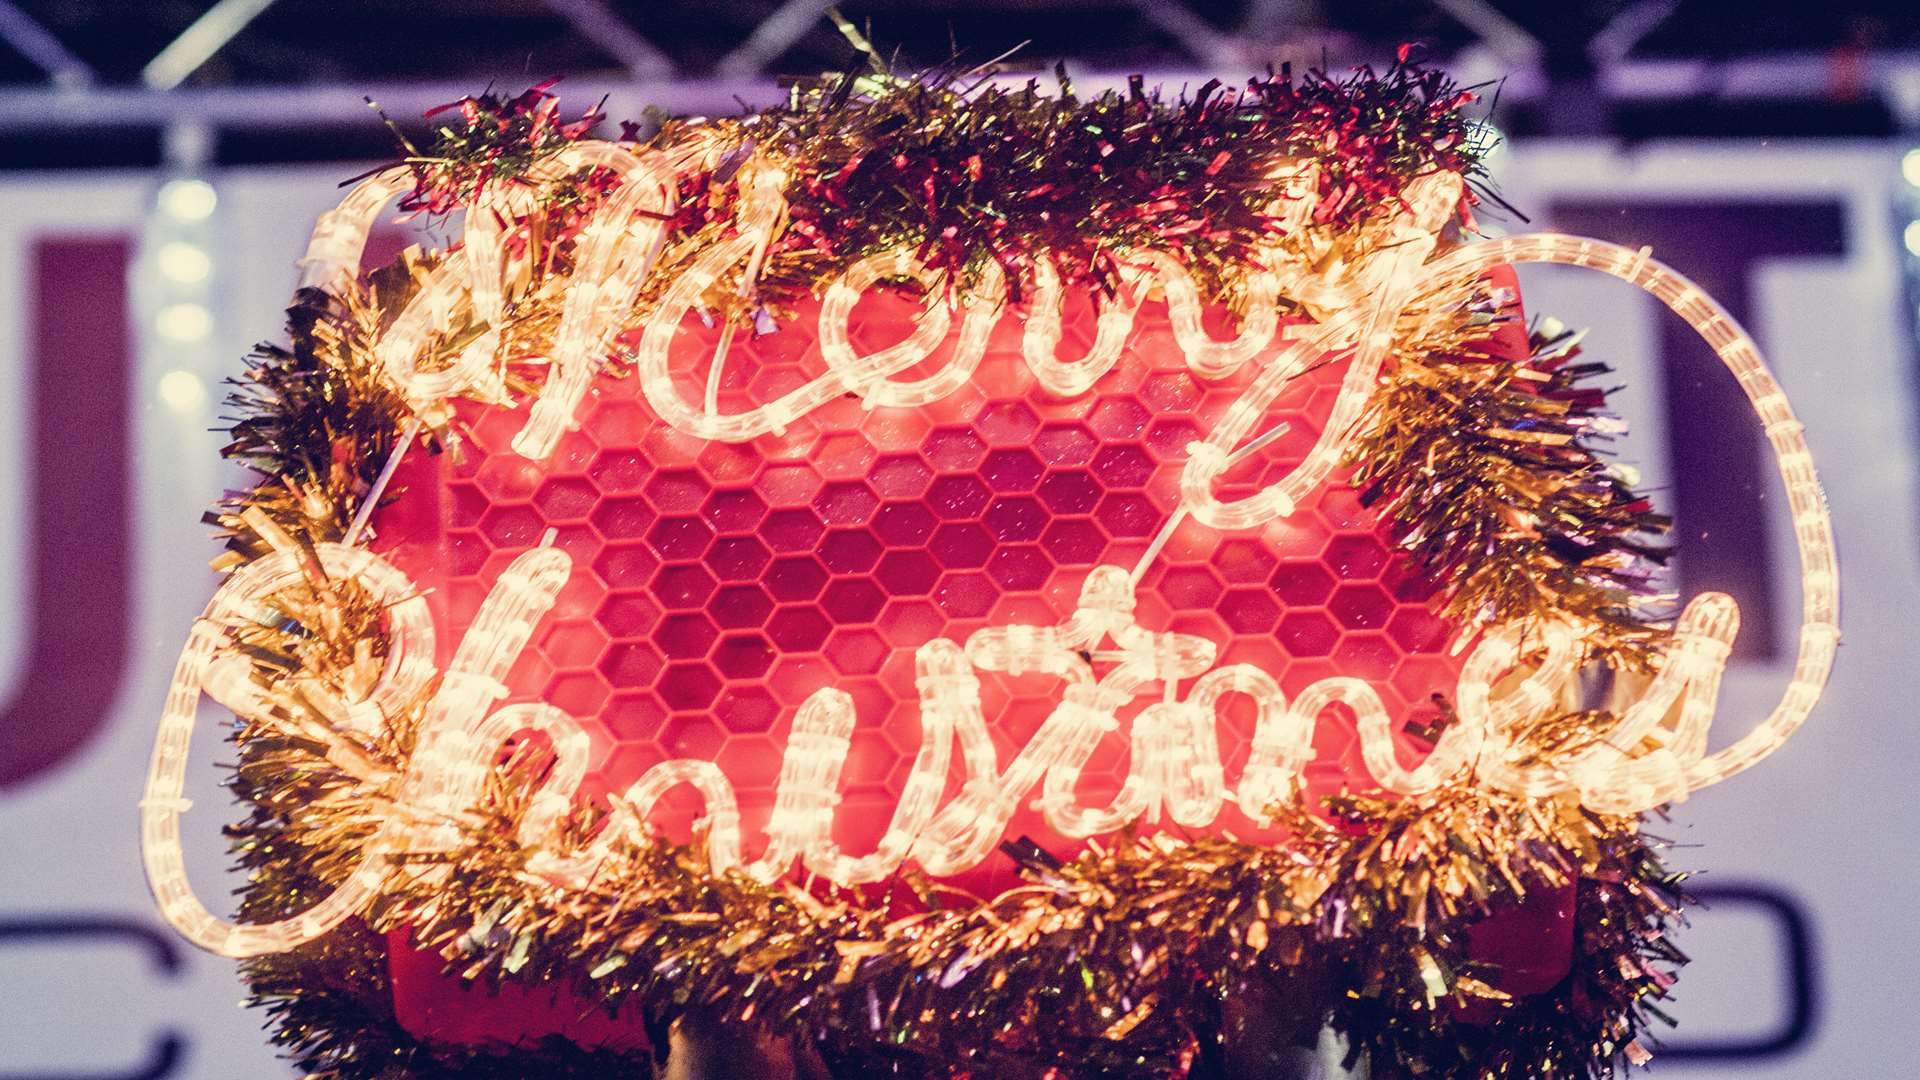 West Malling Christmas lights Picture: Karolina Szczerba